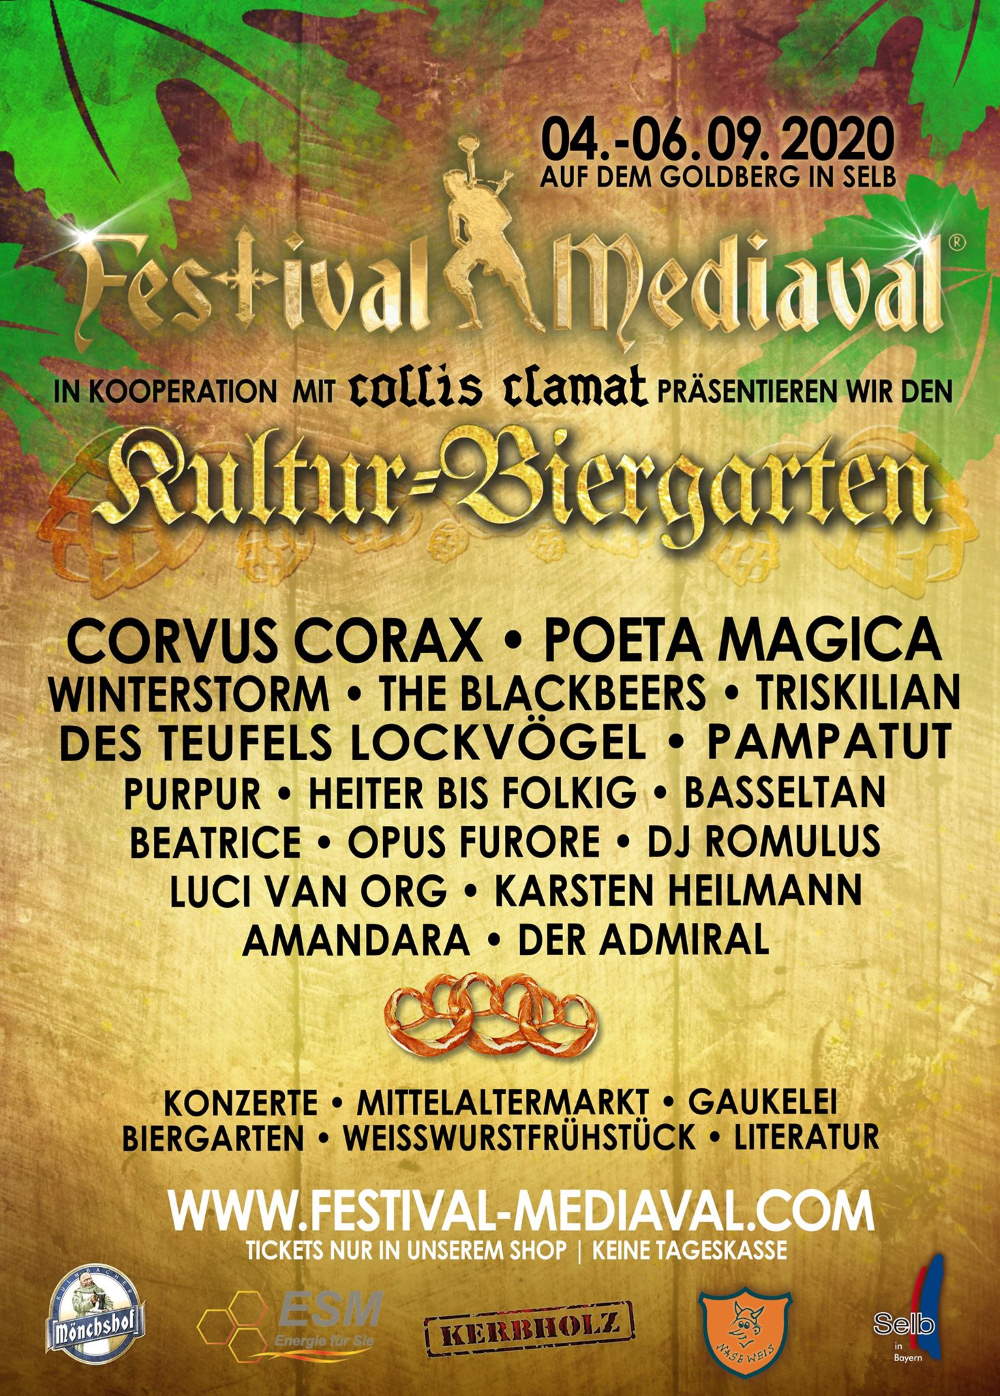 Festival Mediaval Kulturbiergarten